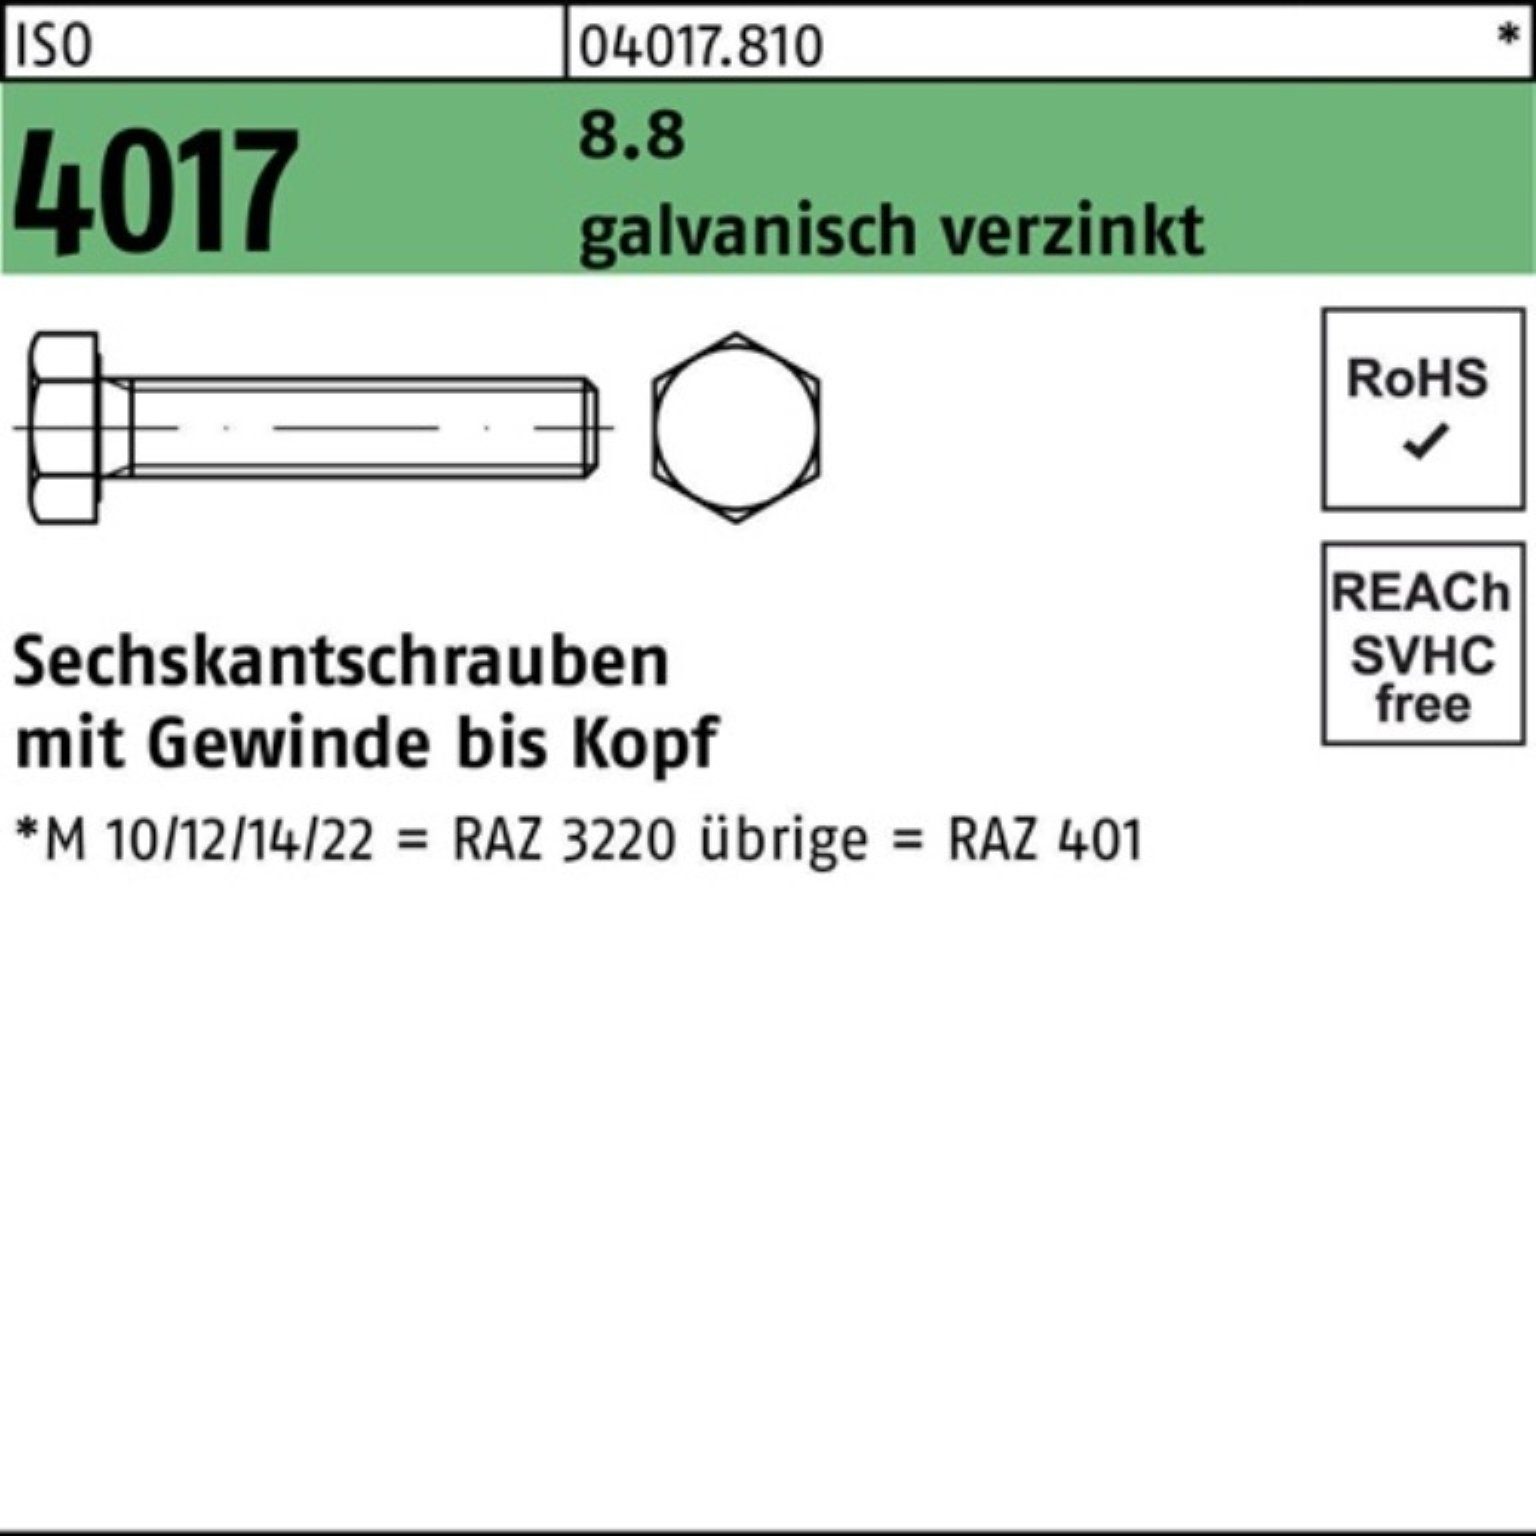 Bufab Sechskantschraube galv.verz. 25 M20x 100er Pack 8.8 VG 120 Sechskantschraube St 4017 ISO